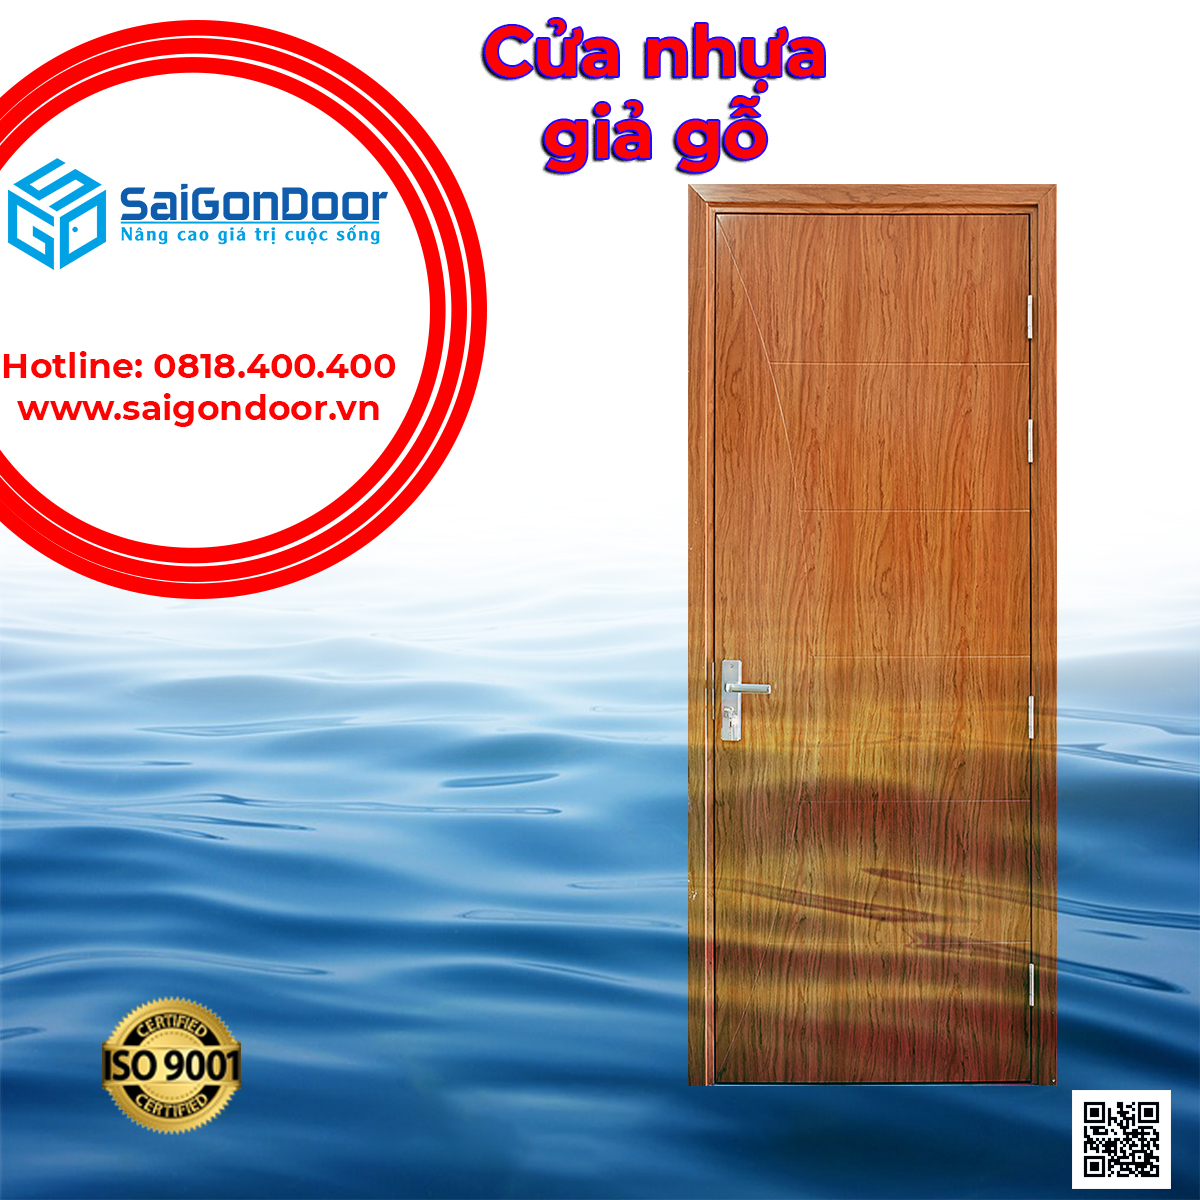 Cửa nhựa giả gỗ - các loại cửa nhựa giả gỗ SaiGonDoor